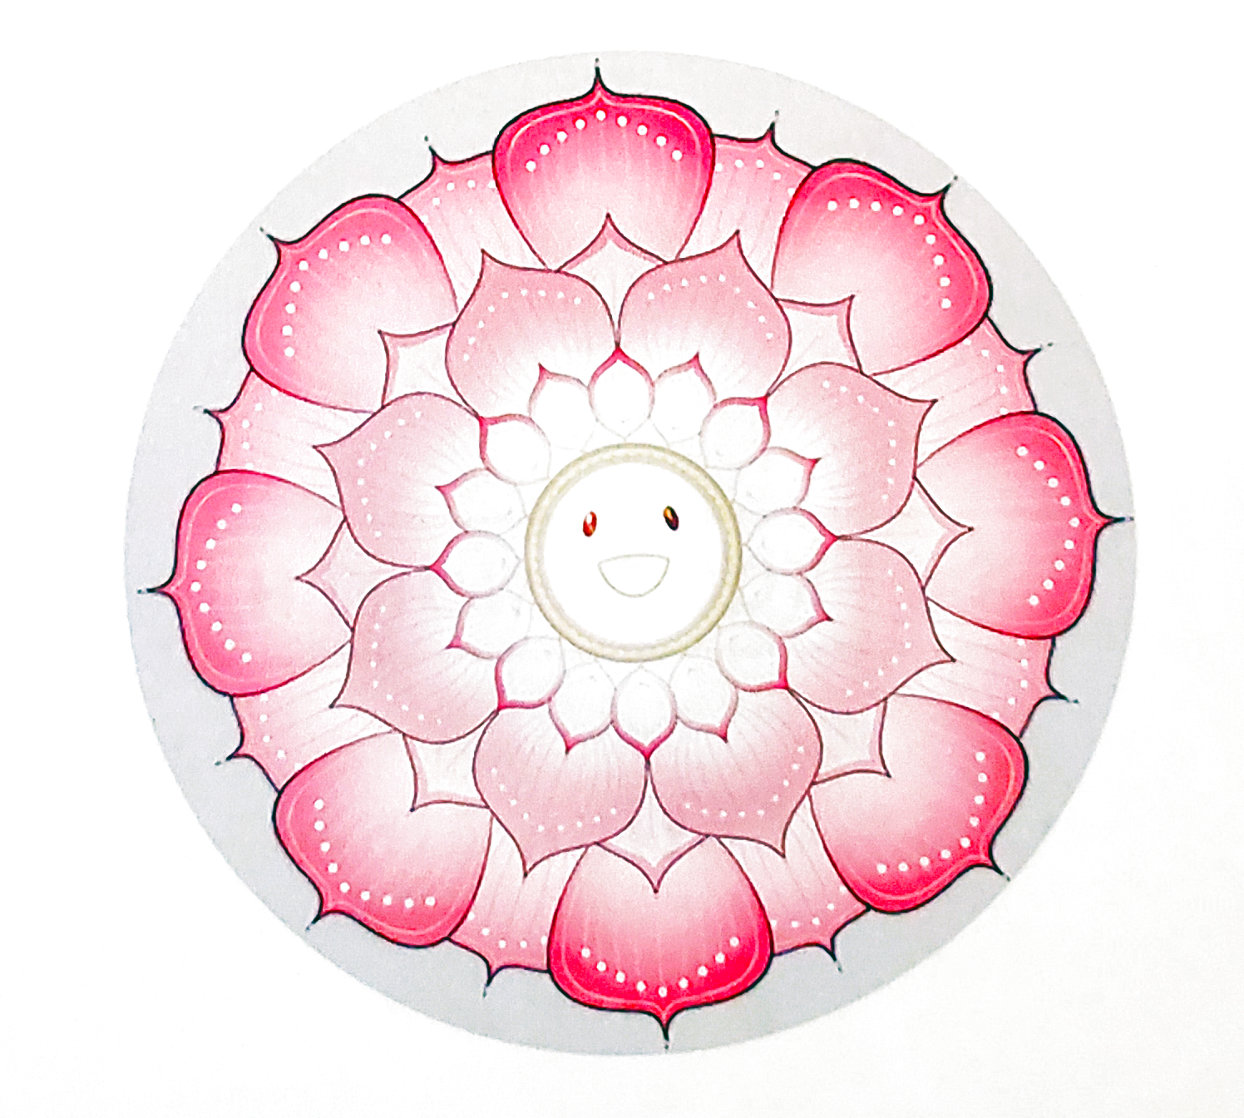 Lotus Flower - Pink 2008 Limited Edition Print by Takashi Murakami